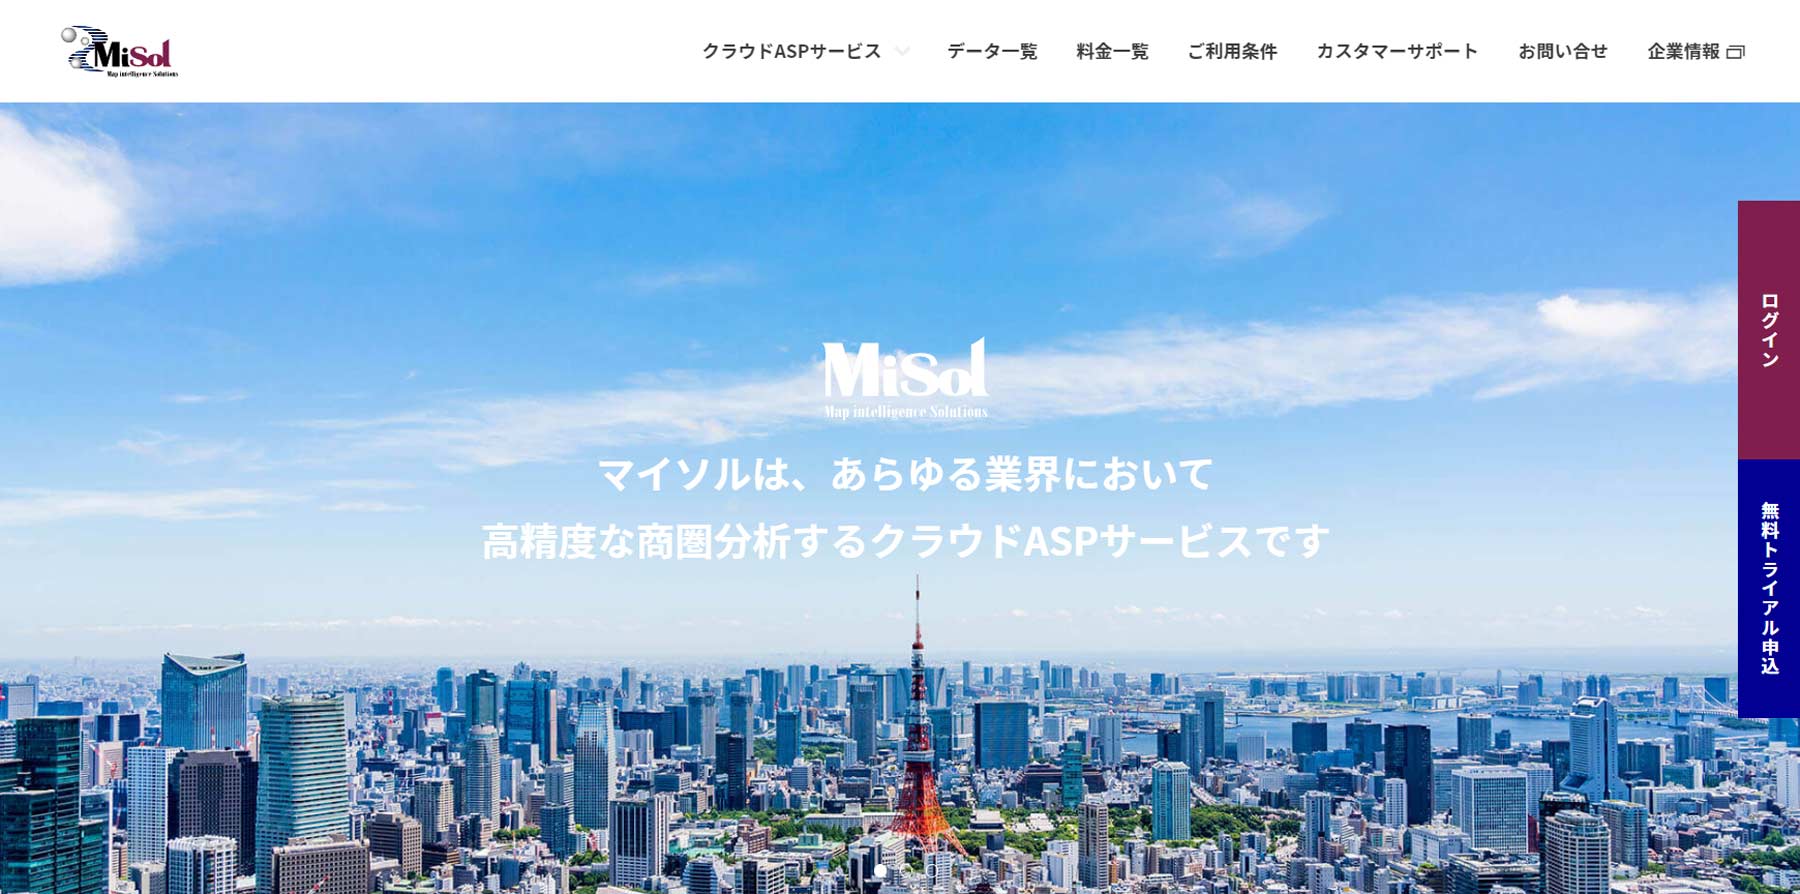 Misol公式Webサイト